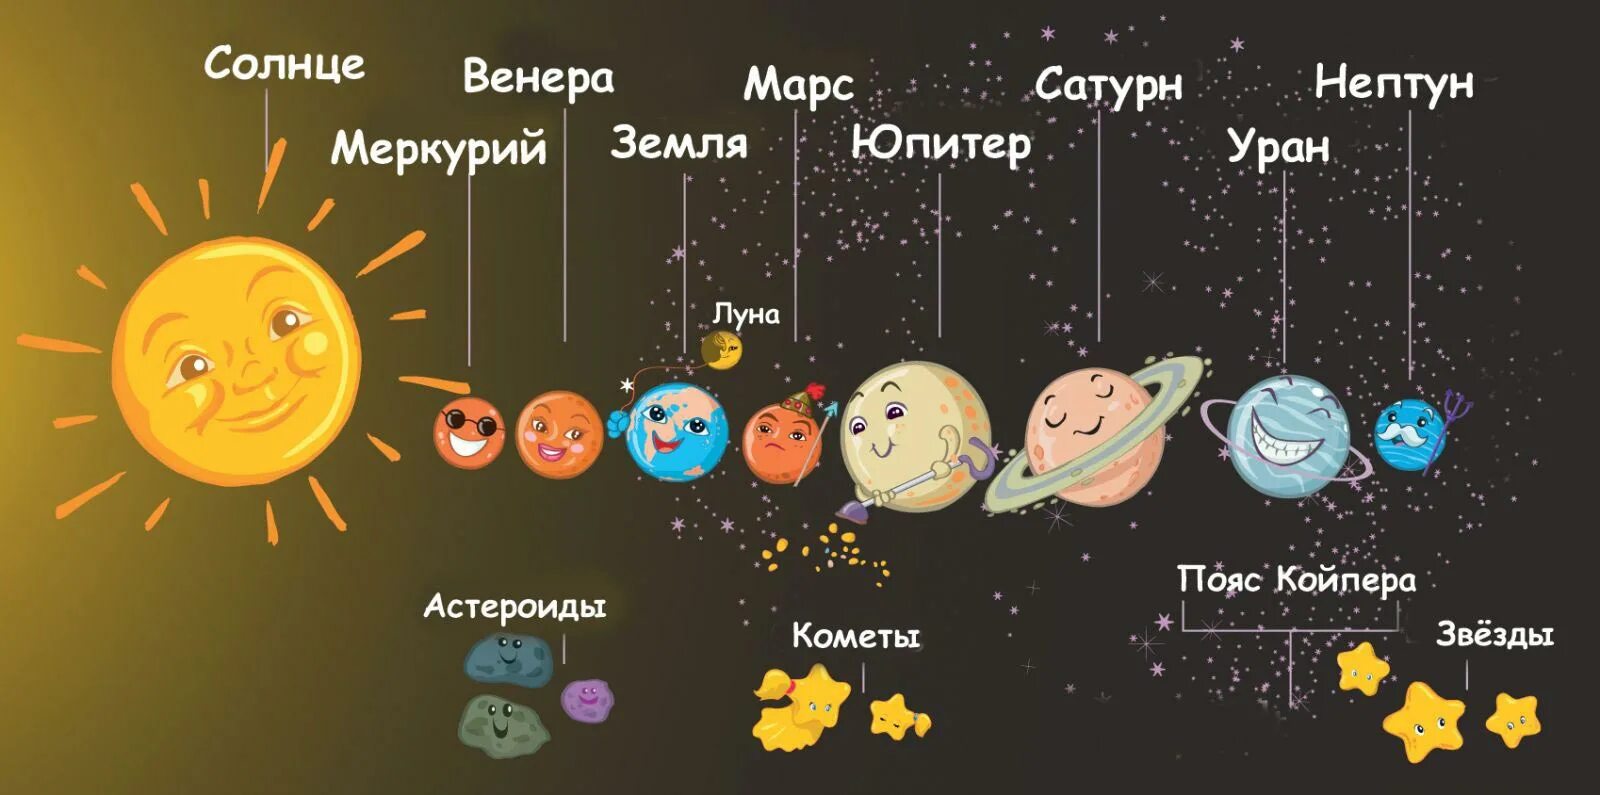 Разница времени в космосе и на земле. Солнечная система с названиями планет для детей. Расположение планет солнечной системы. Расположение планет солнечной системы по порядку от солнца. Планеты солнечной системы по порядку для детей с названиями.